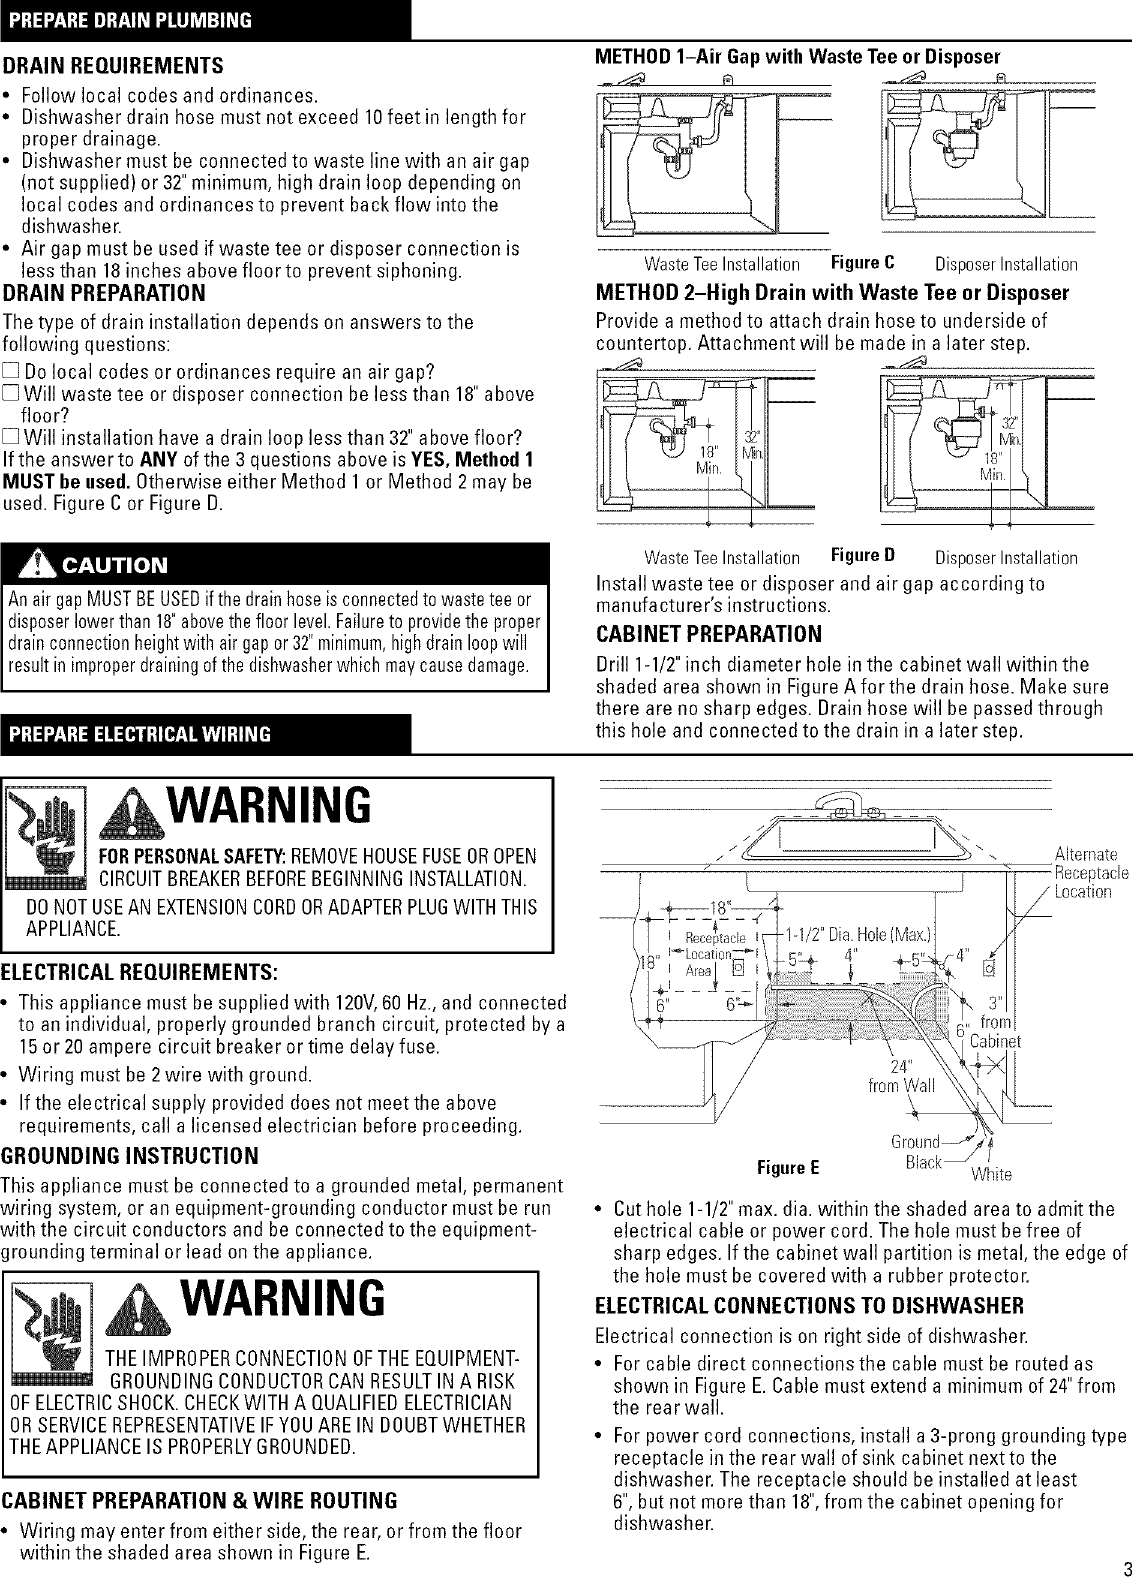 Page 3 of 8 - GE  Dishwasher Manual L0504084